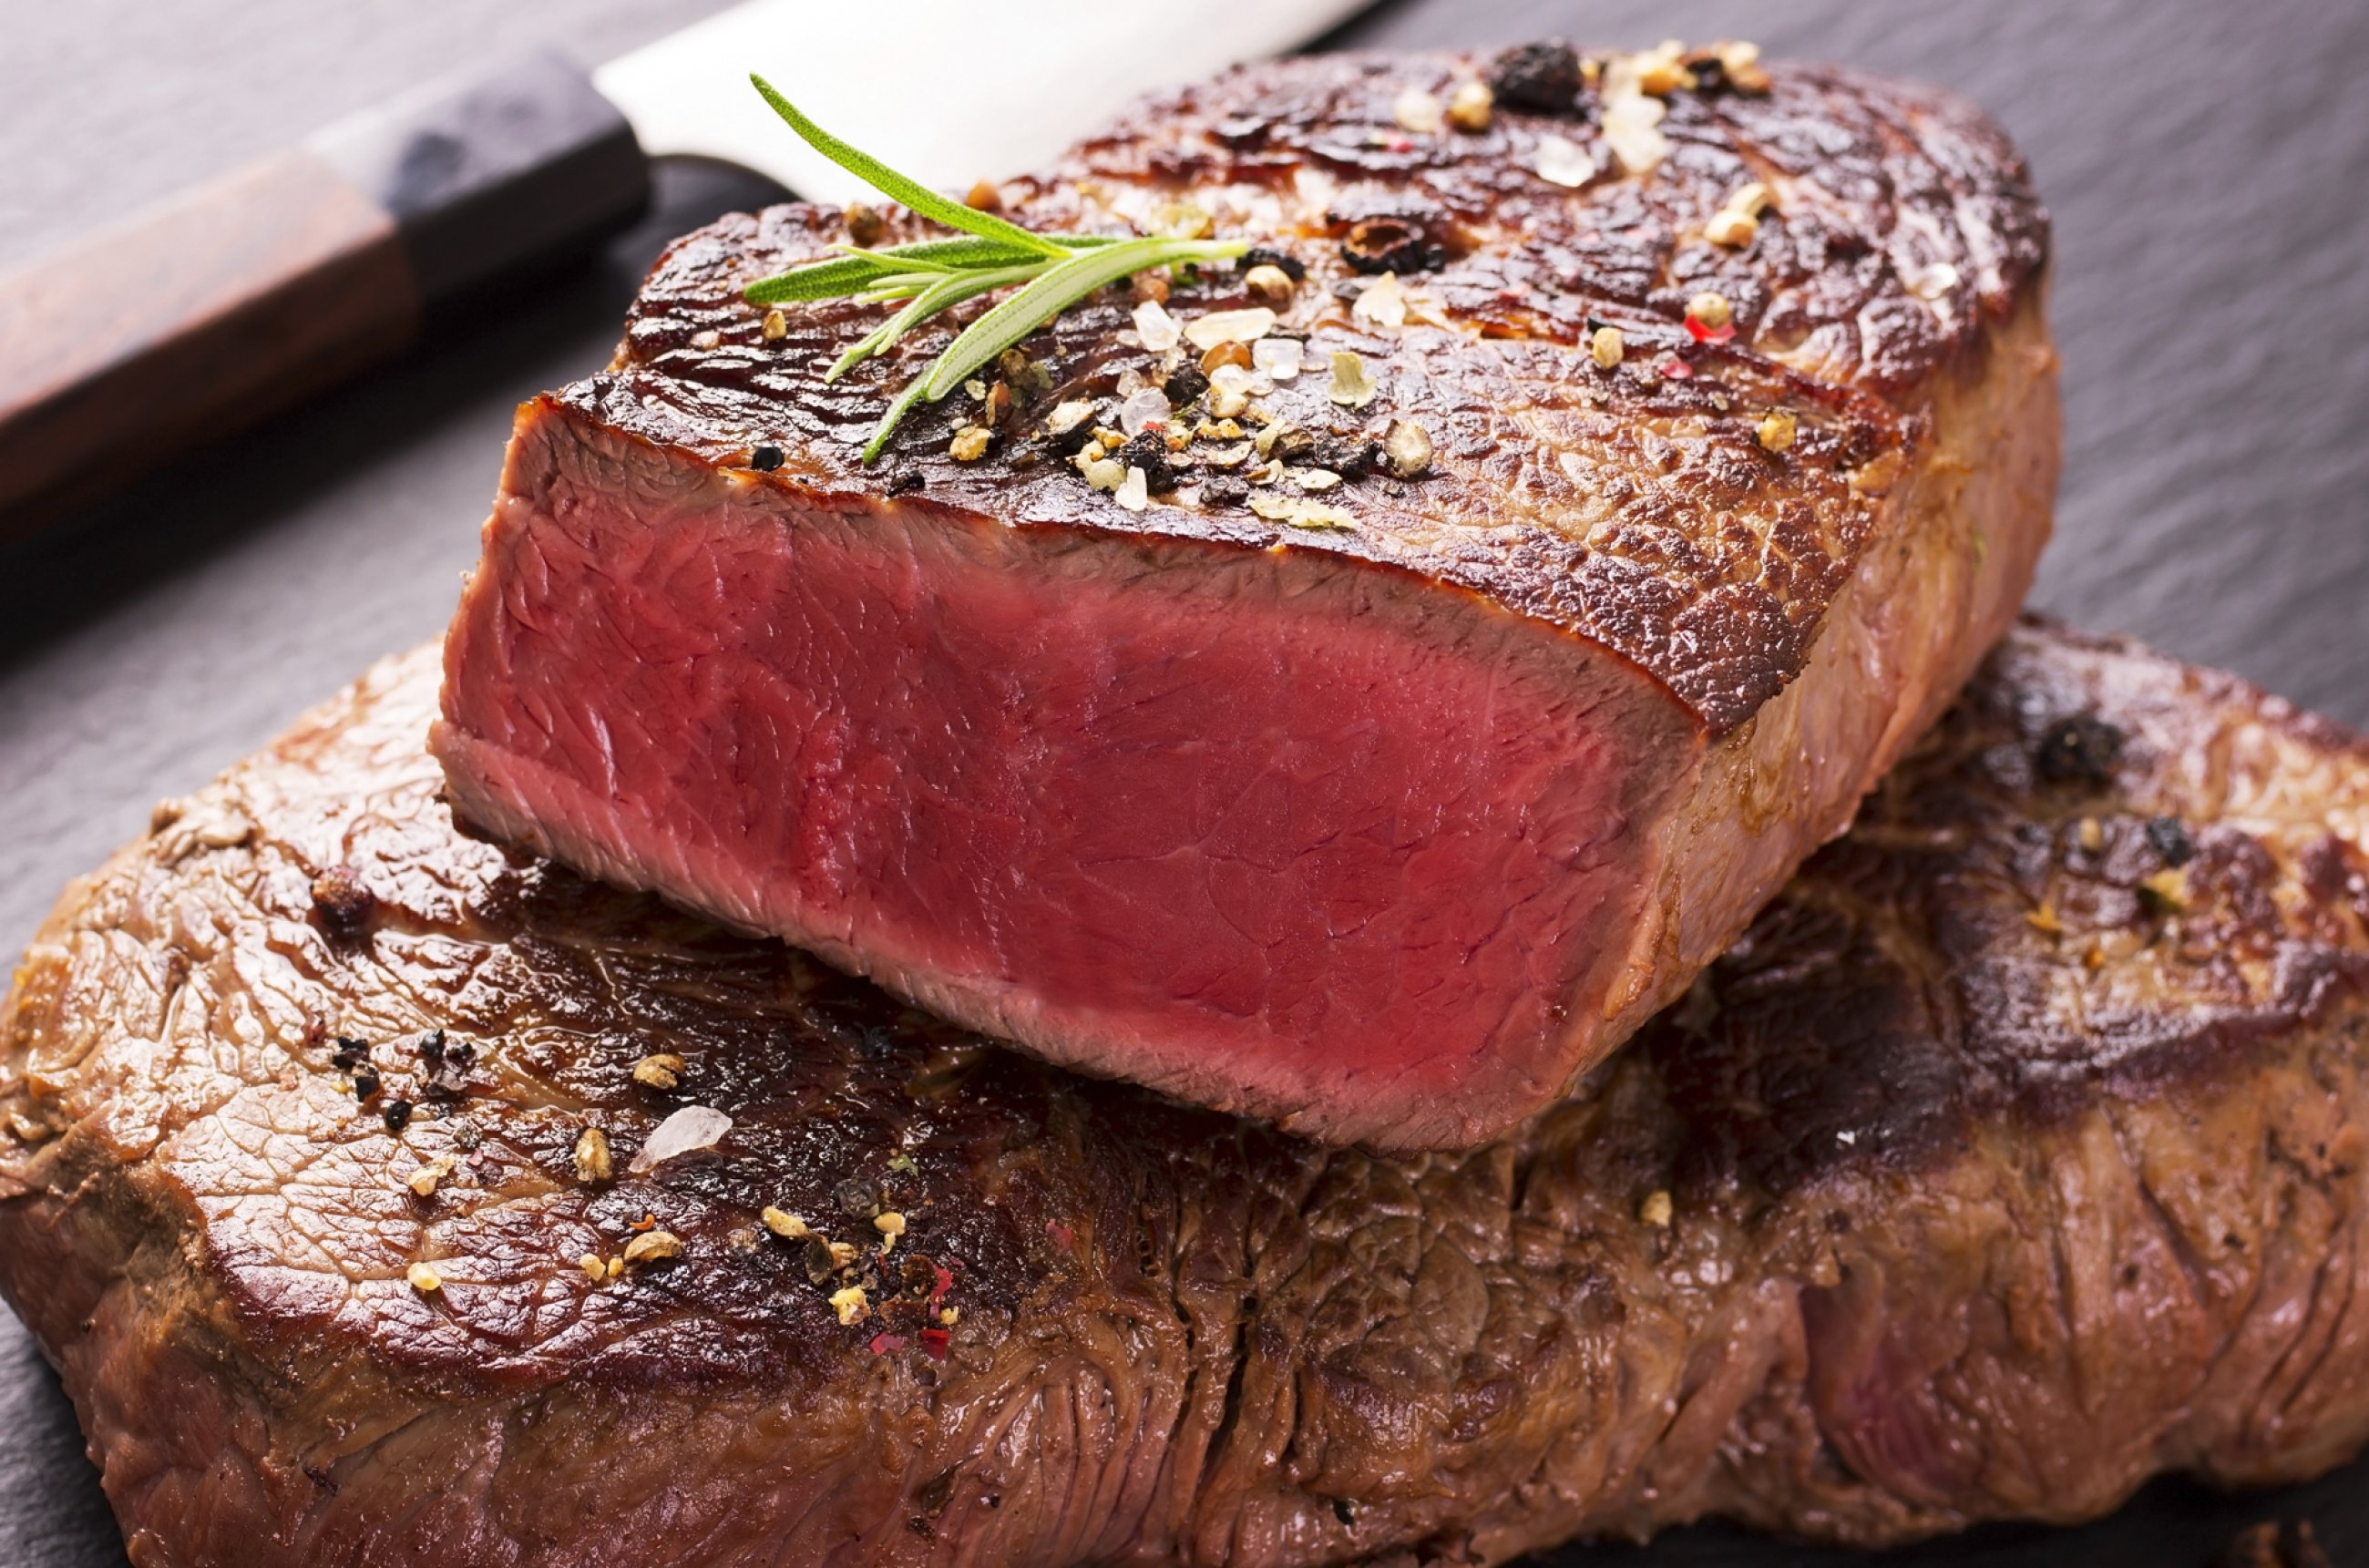 https://bubo.sk/uploads/galleries/16033/jar-steak.jpg